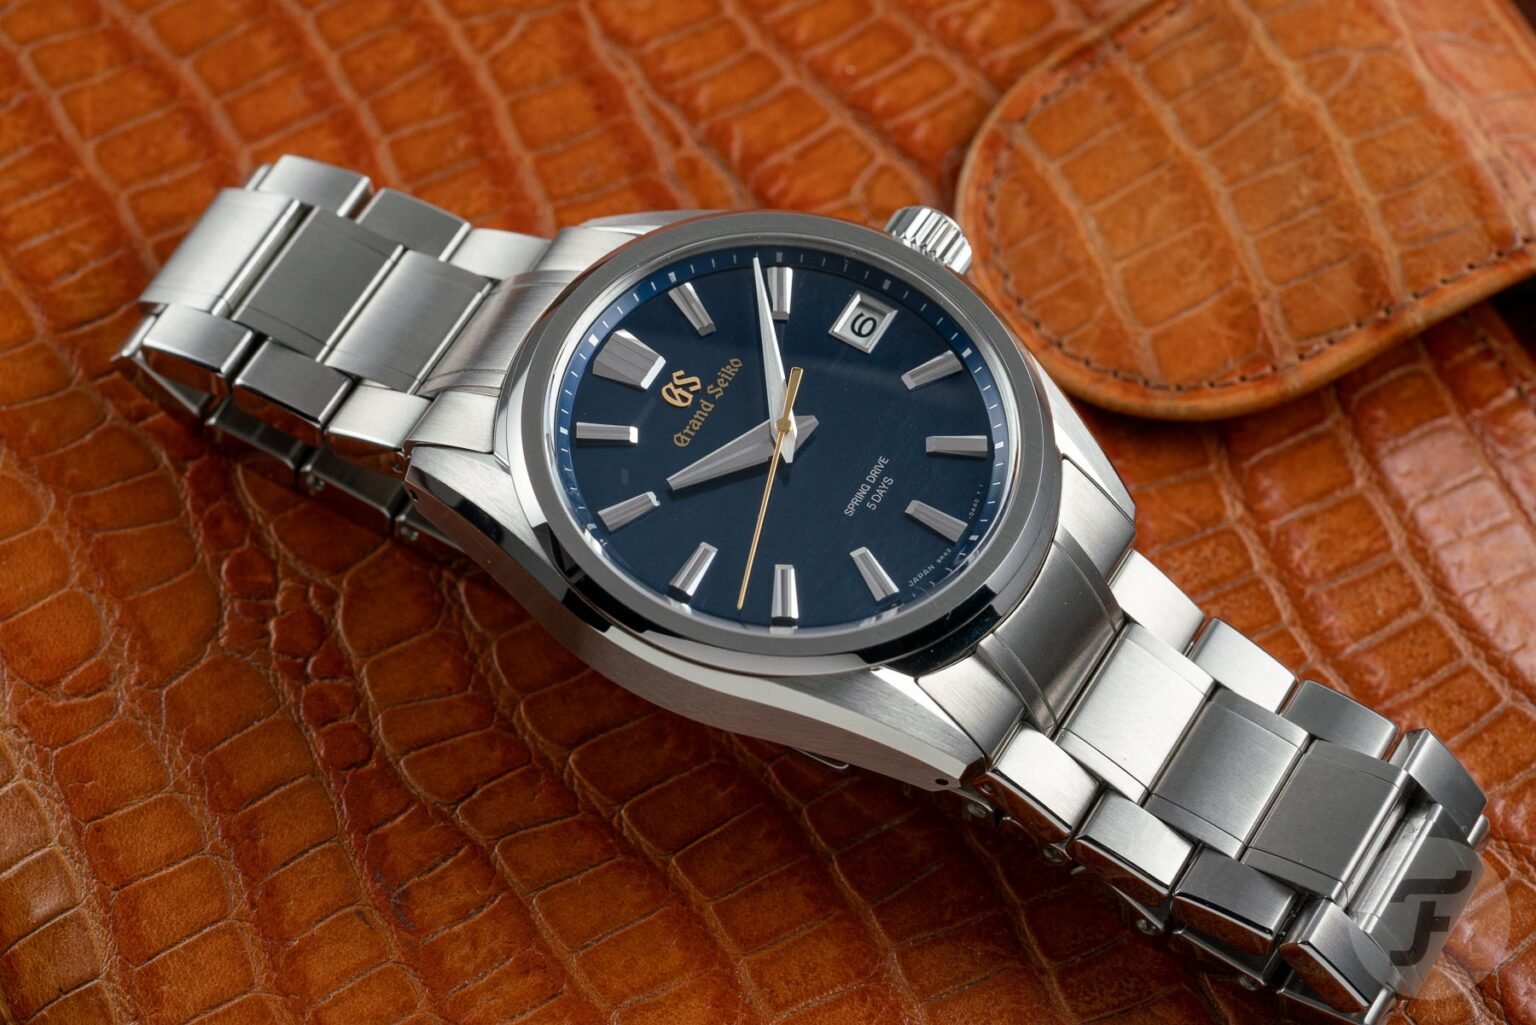 The Grand Seiko SLGA007 Limited Edition Watch (2021)